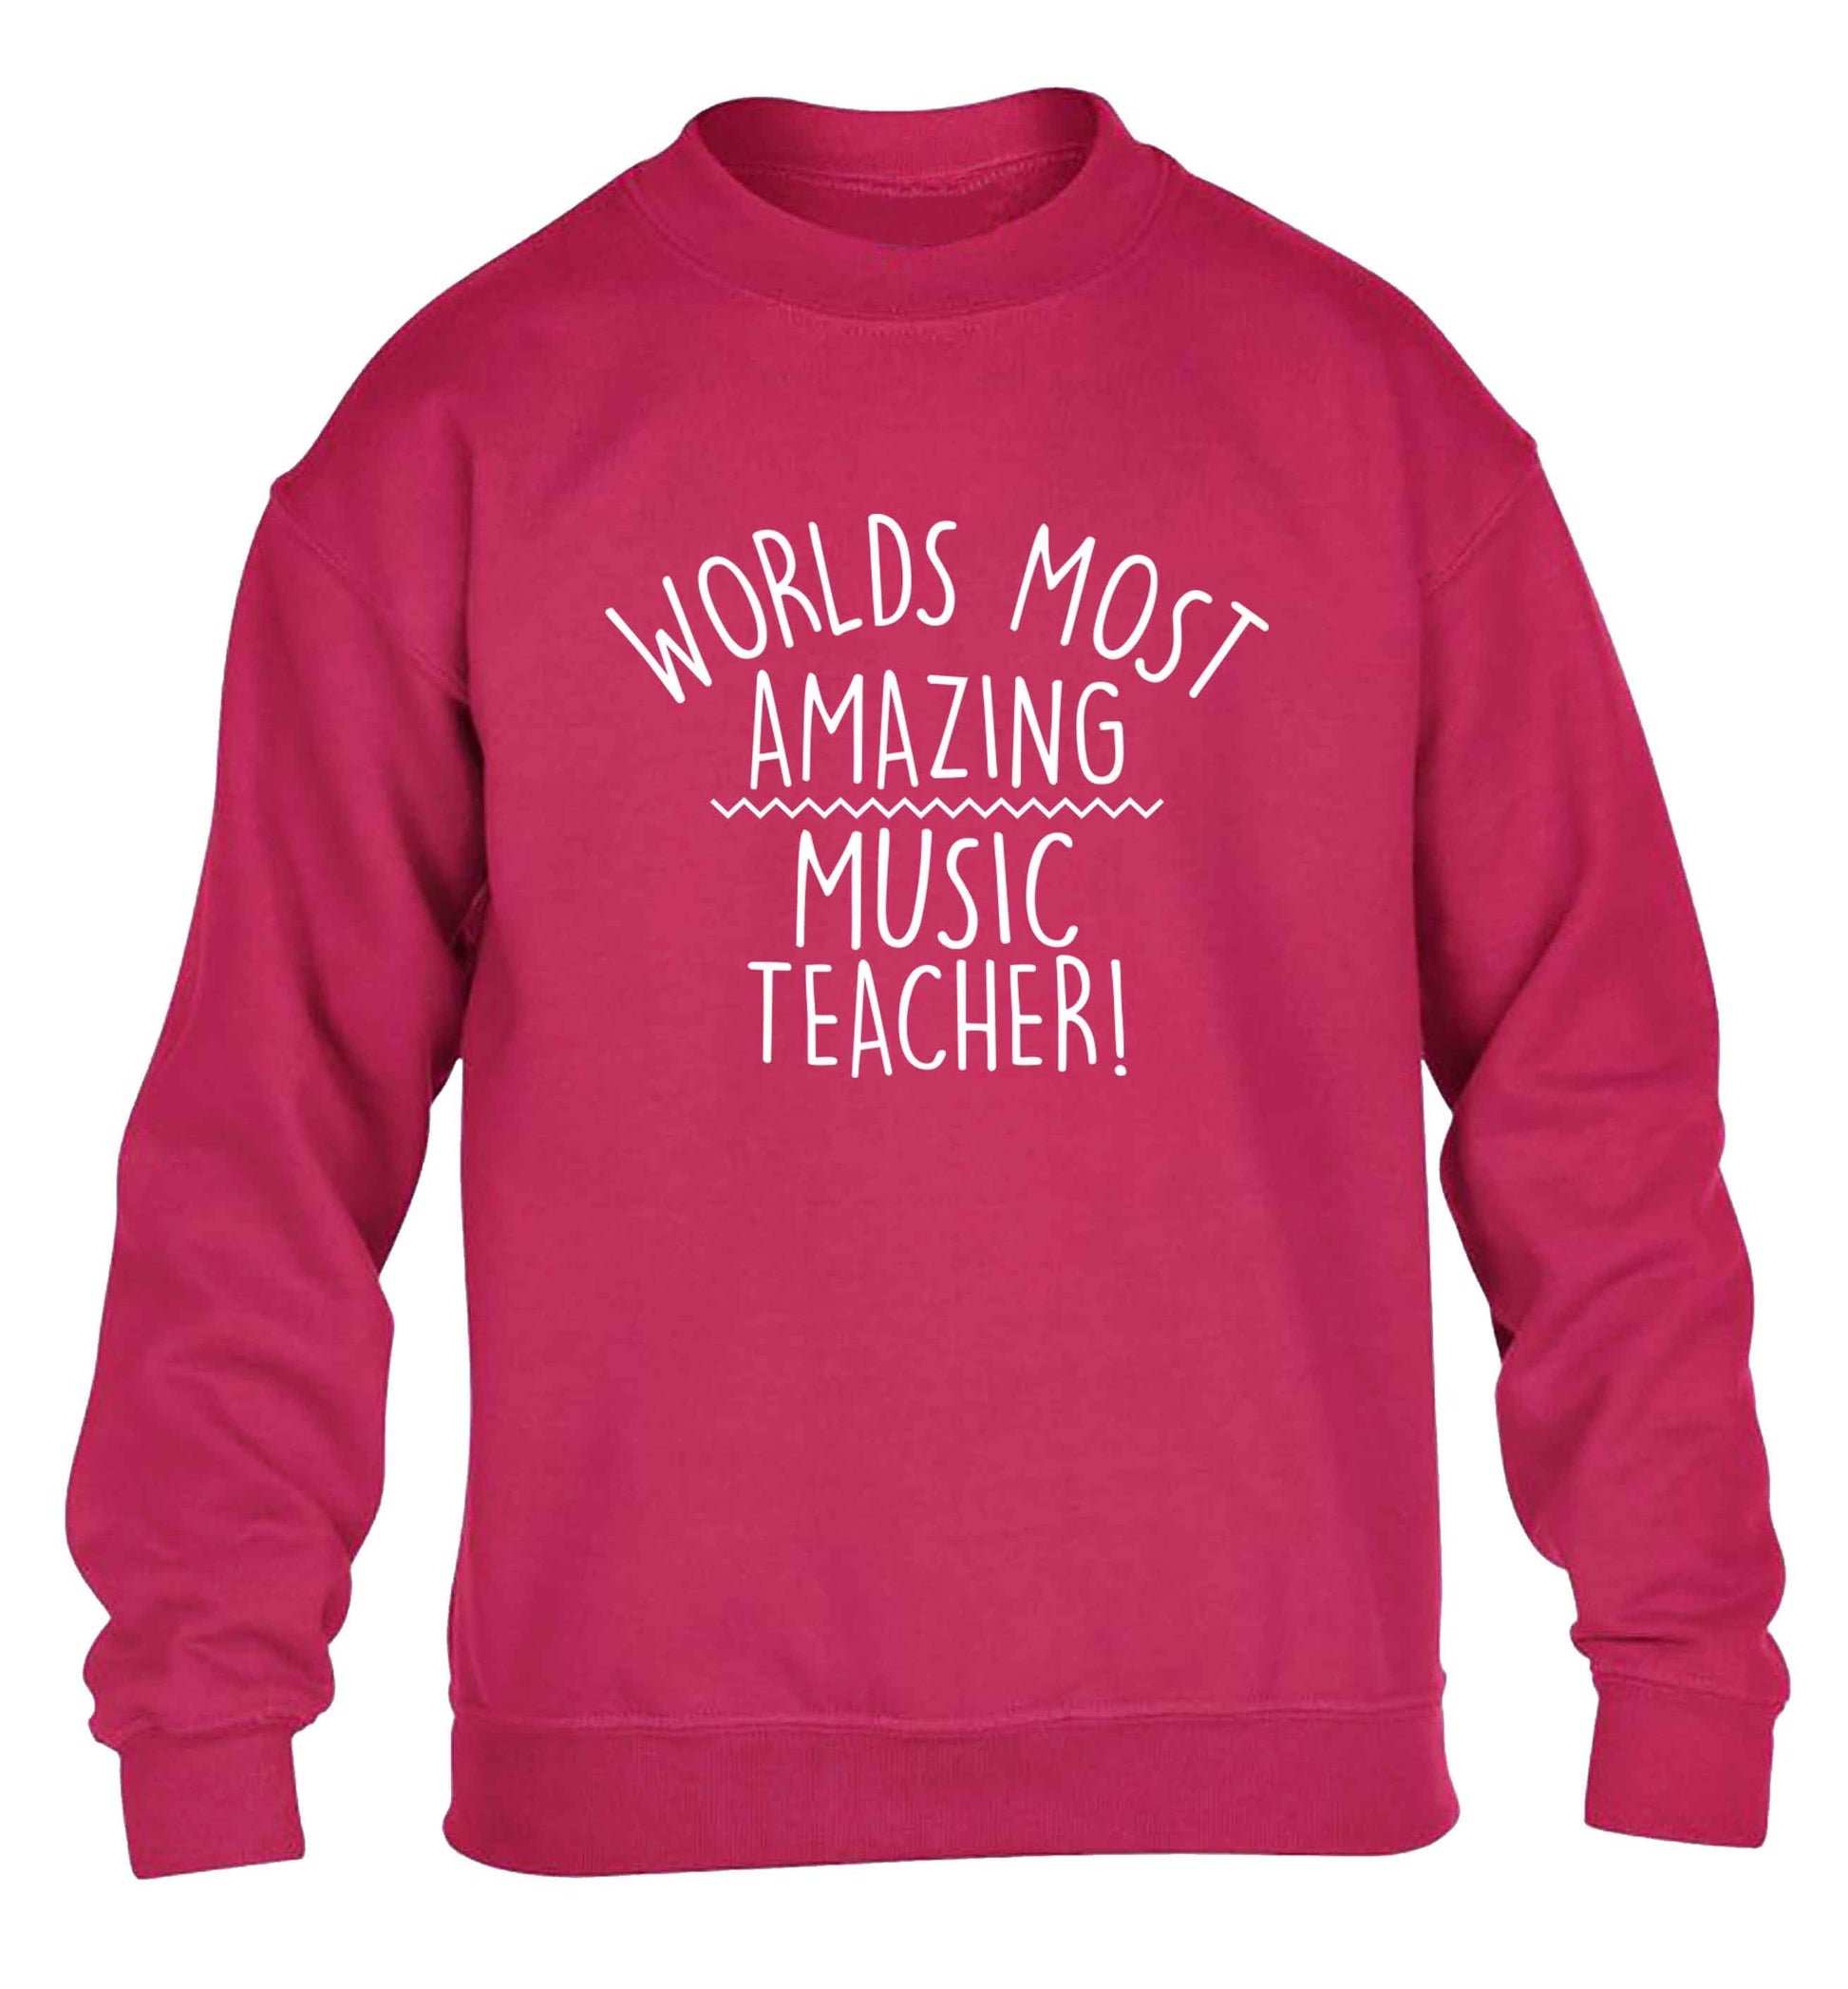 Worlds most amazing music teacher children's pink sweater 12-13 Years